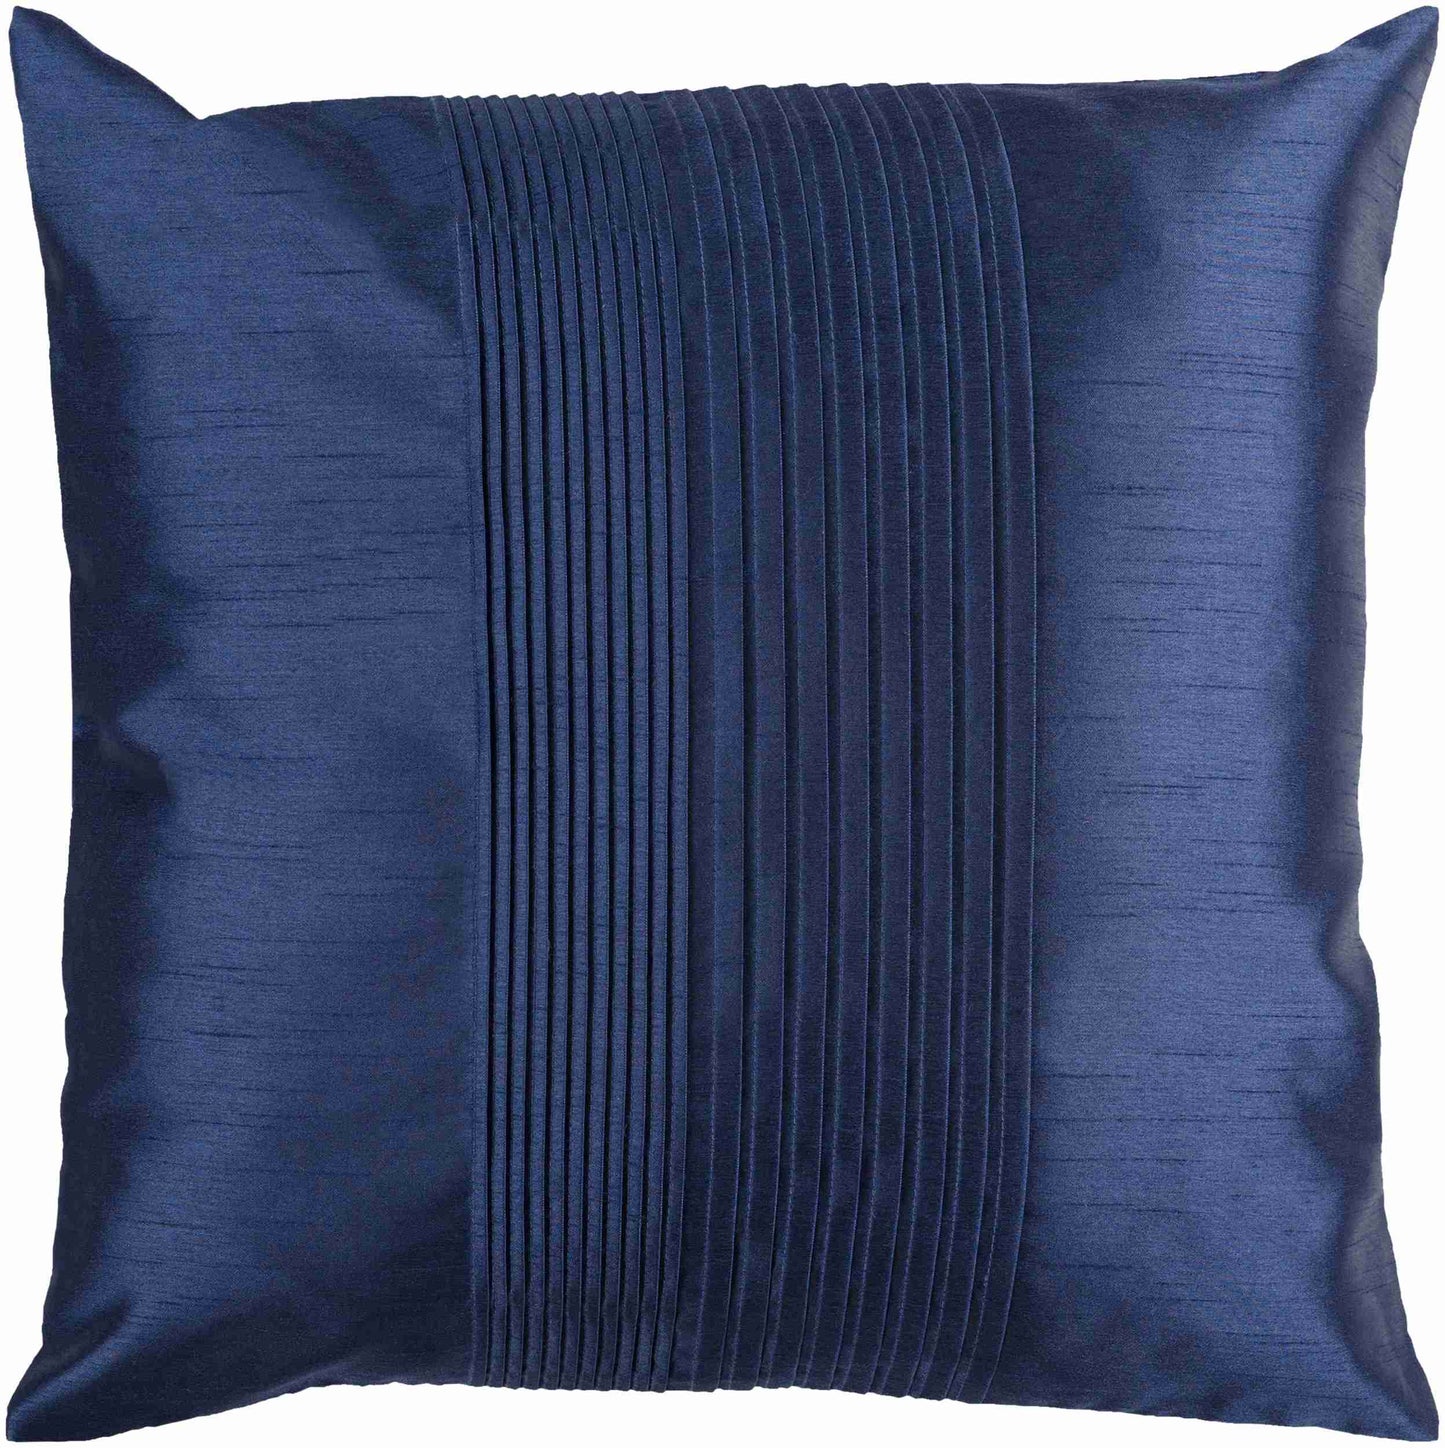 Rixensart Navy Pillow Cover